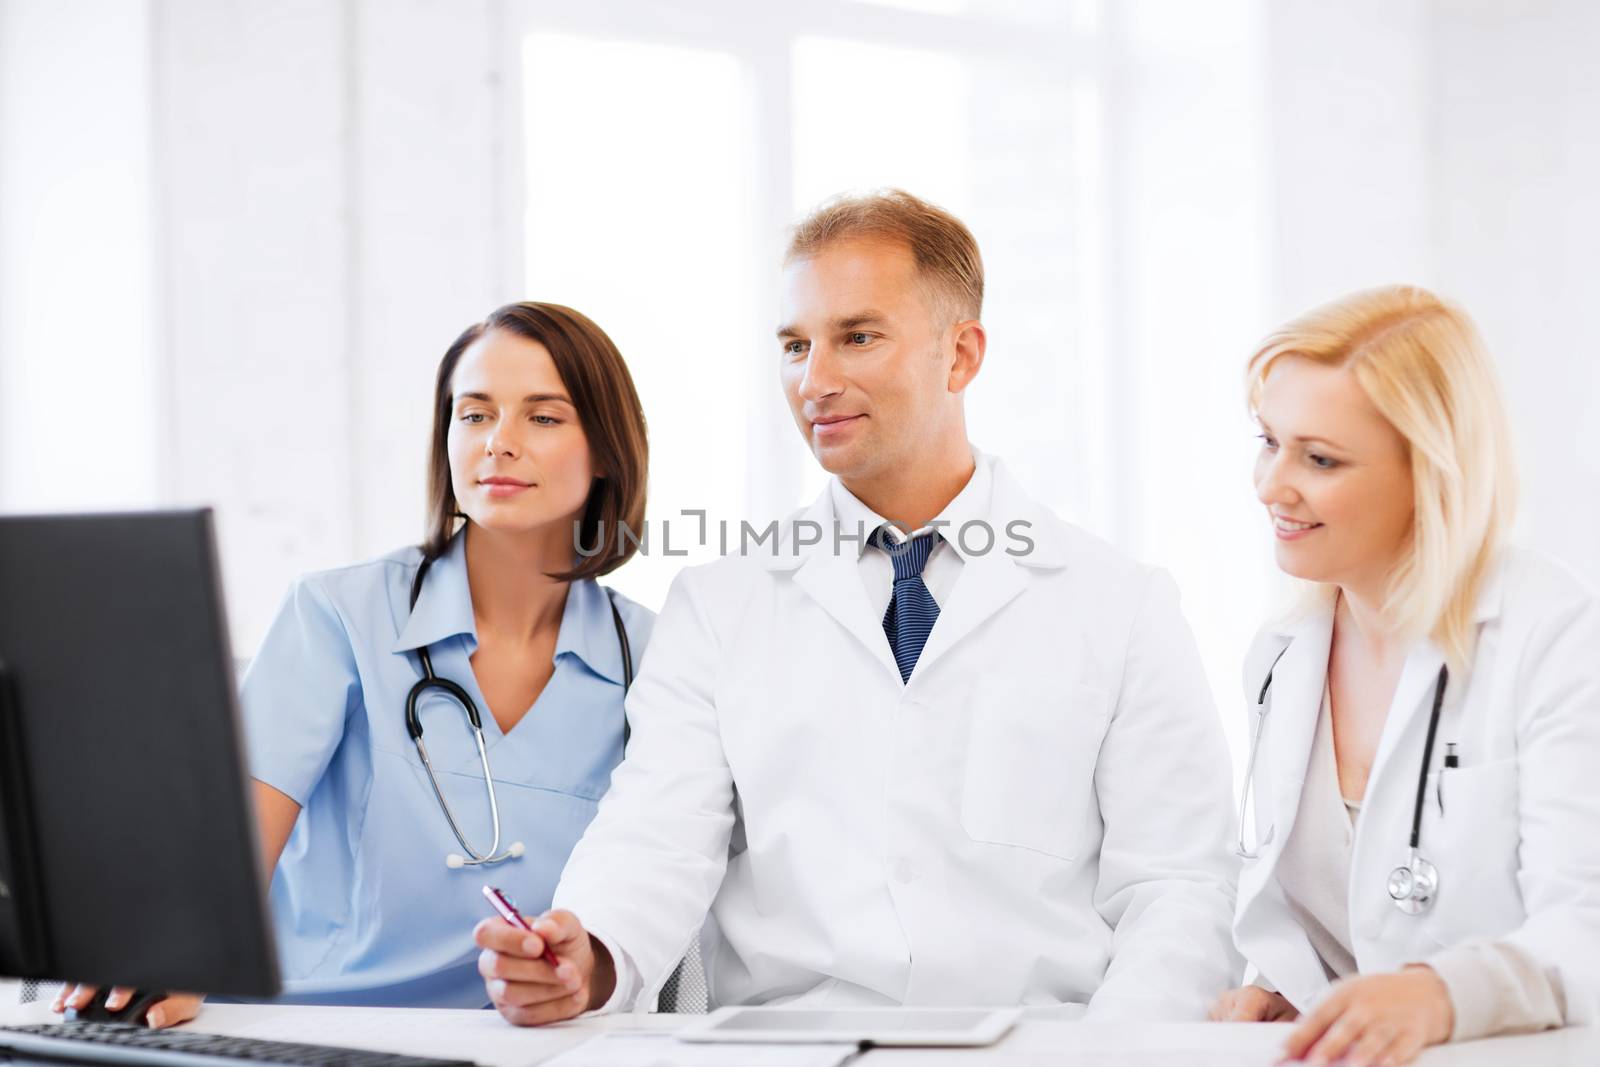 doctors looking at computer on meeting by dolgachov